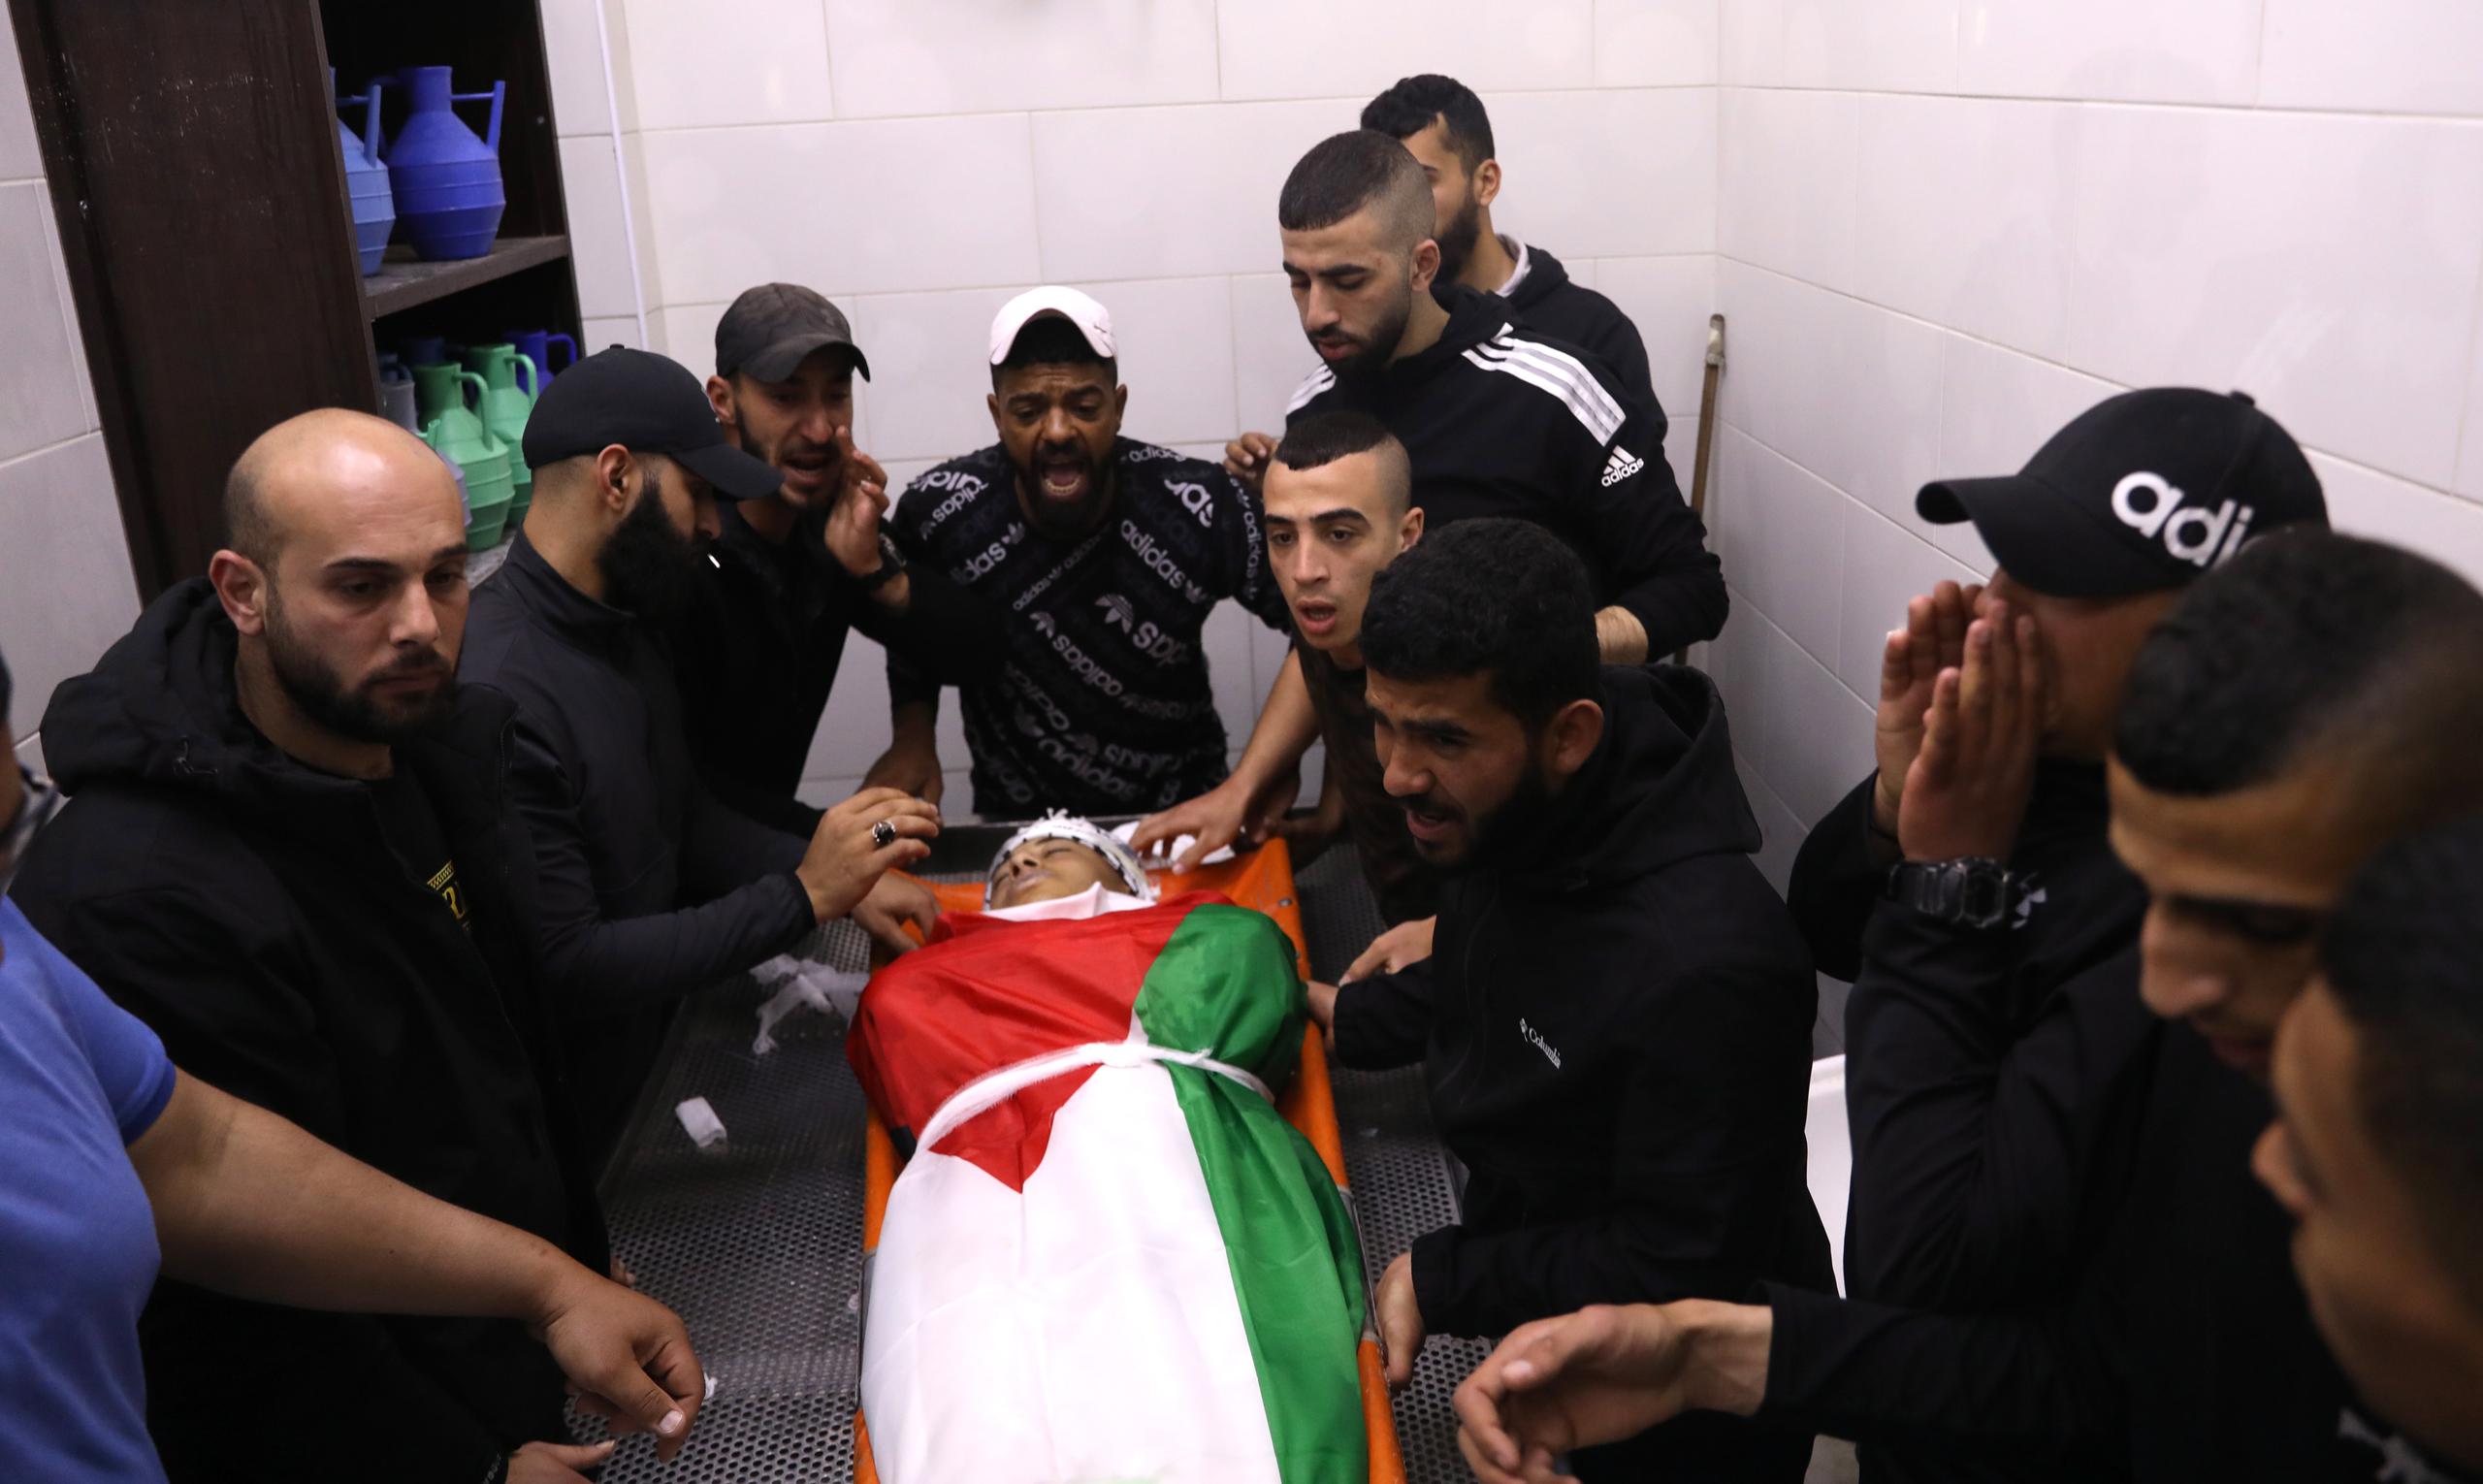 Familiares del joven palestino Mohamed Zakarneh velan su cadaver en el hospital de Jenin, en la Cisjordania ocupada. EFE/EPA/ALAA BADARNEH
